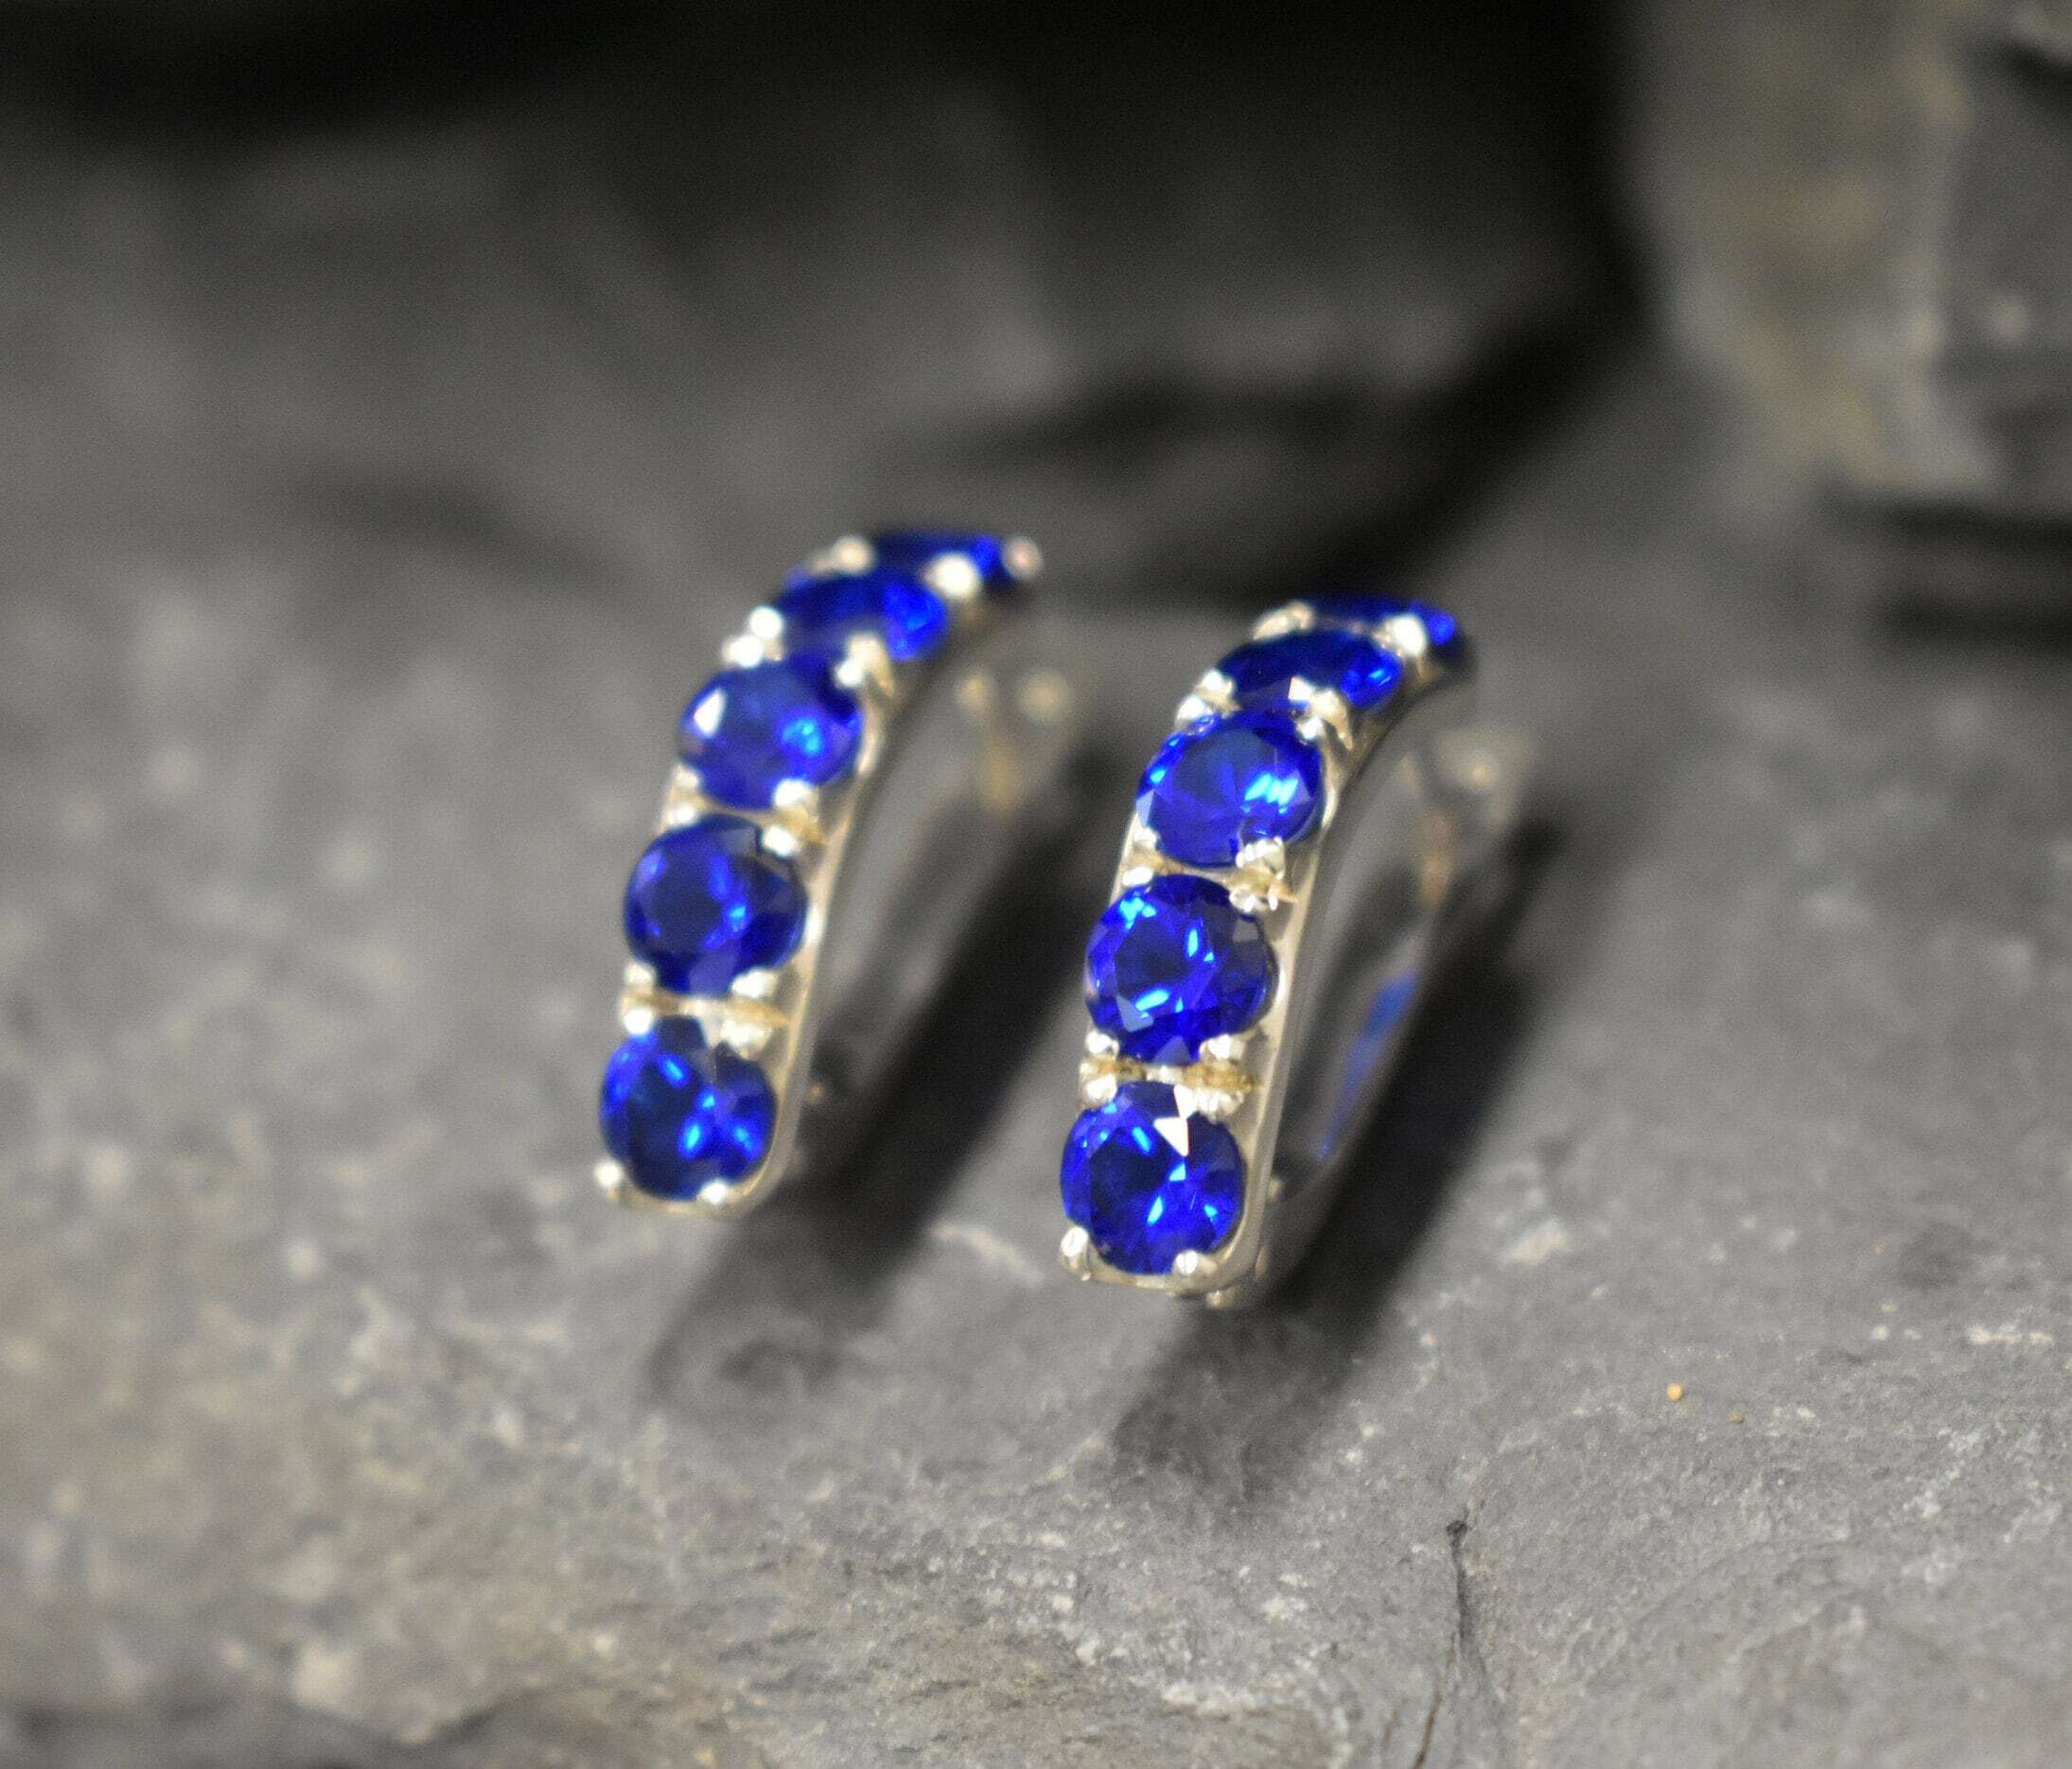 Blue Sapphire Earrings - Dainty Hoop Earrings - Silver Blue Huggies